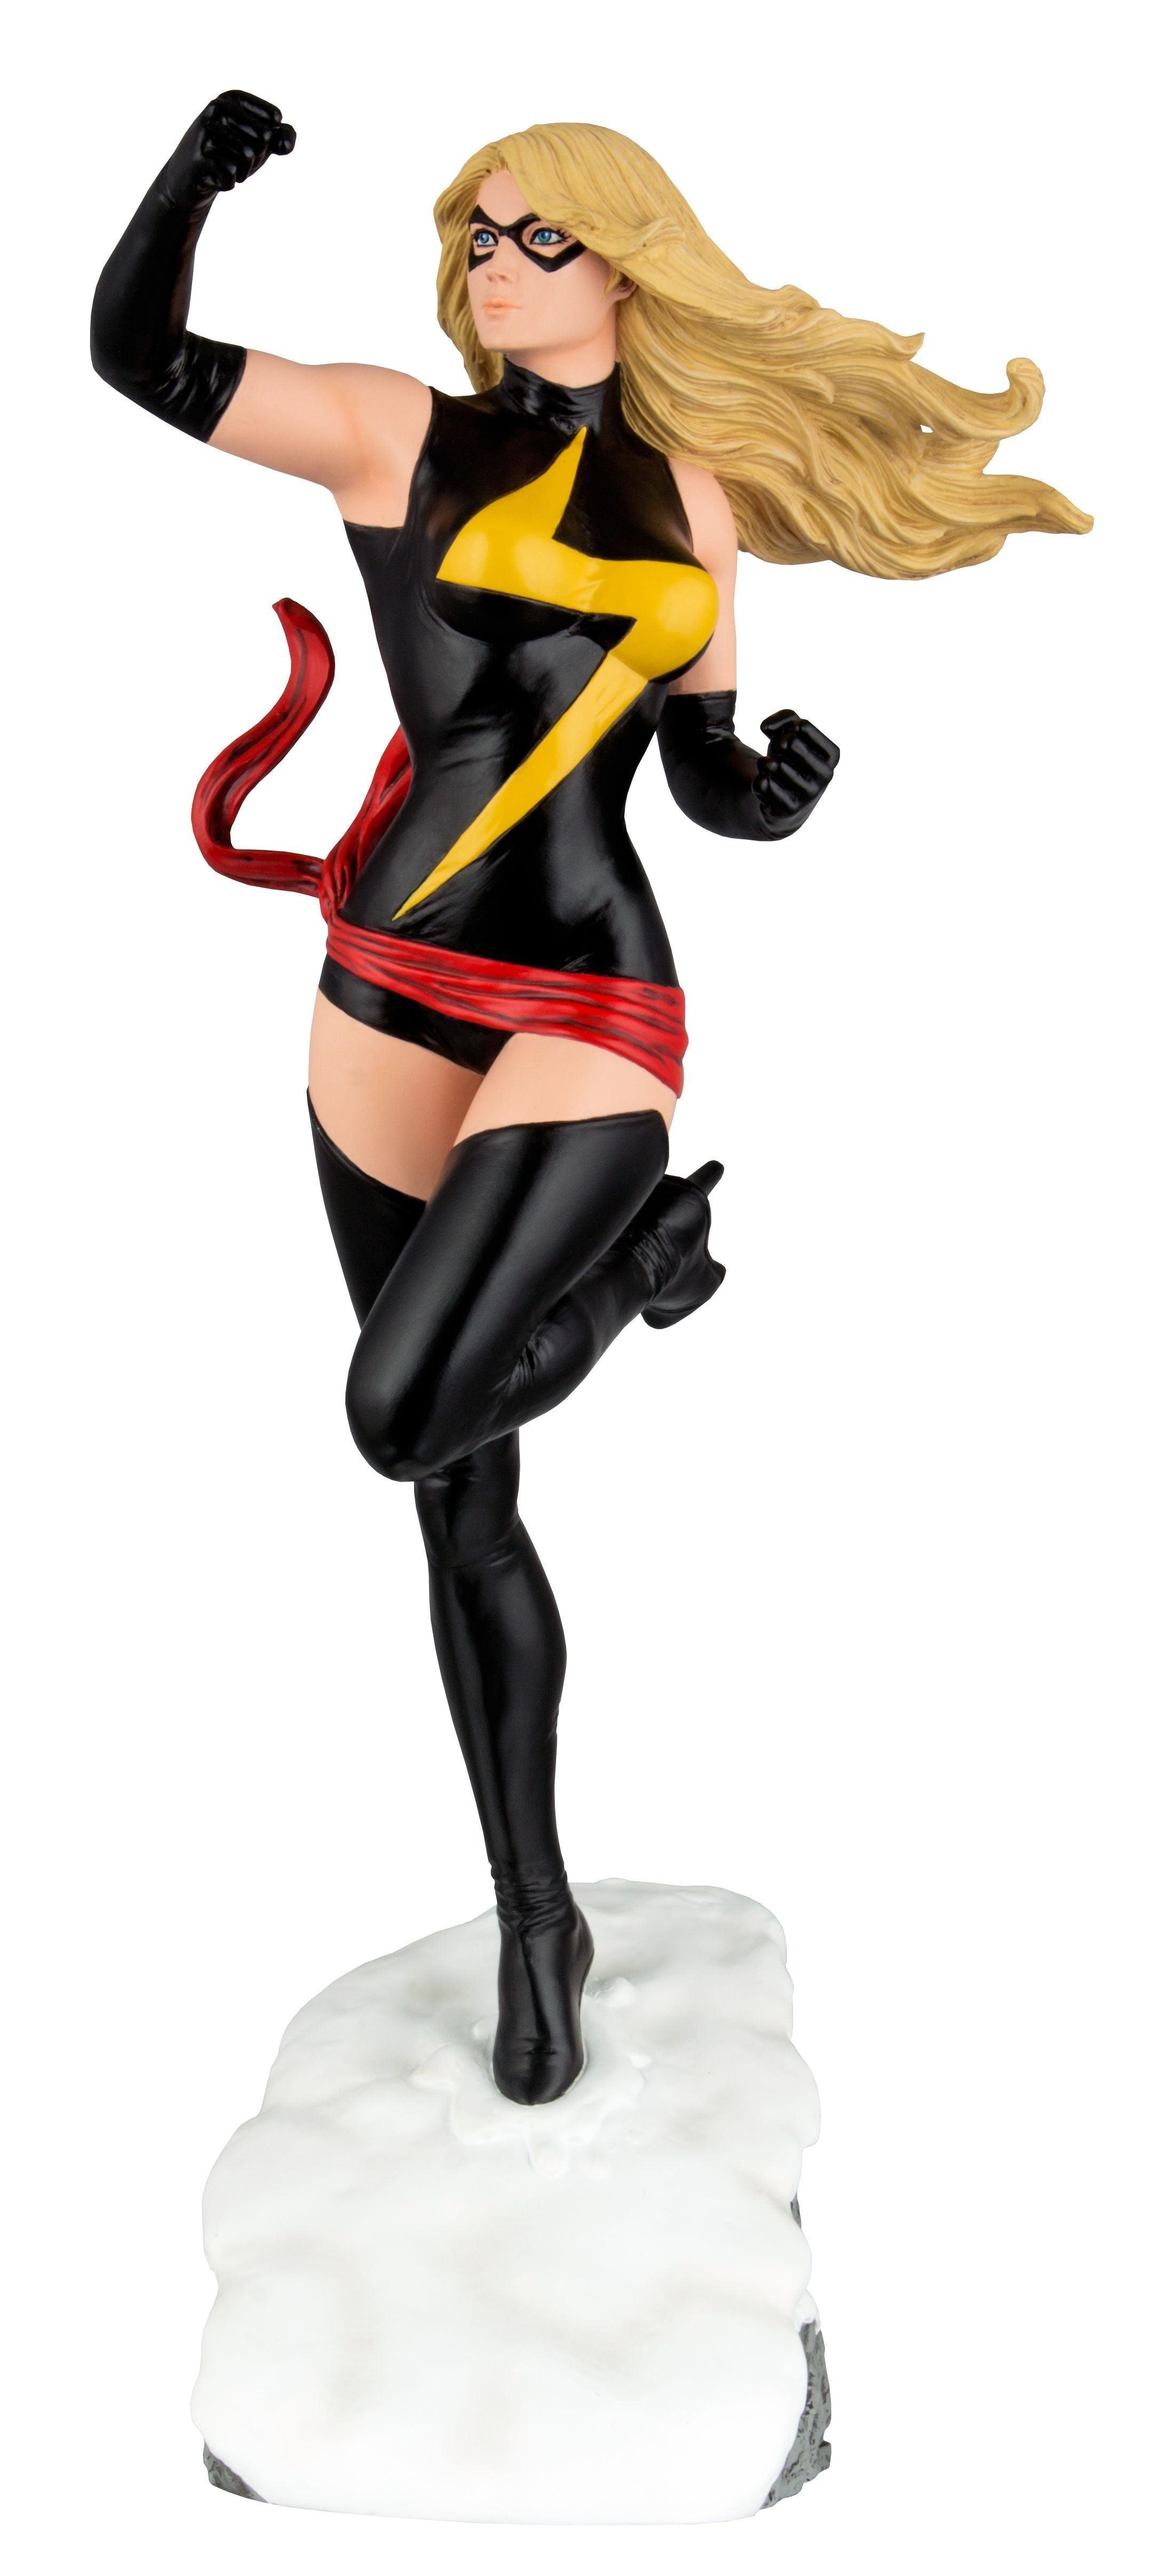 IKO0811 Ms Marvel - Carol Danvers 1:6 LE Statue - Ikon Collectables - Titan Pop Culture